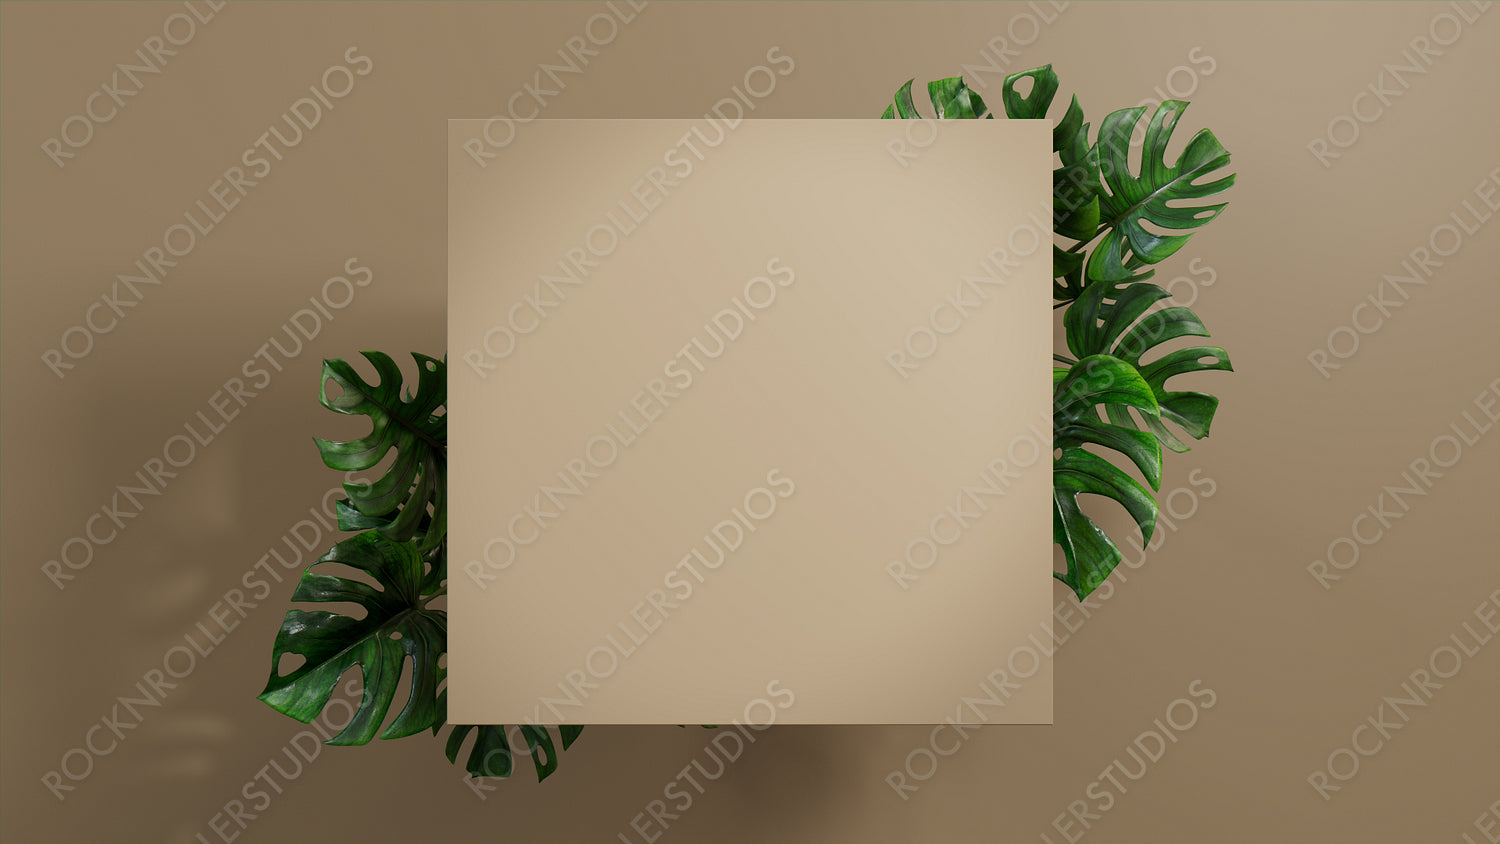 Square Botanical Frame with Monstera Plant Border. Beige, Natural Design for Product Display.